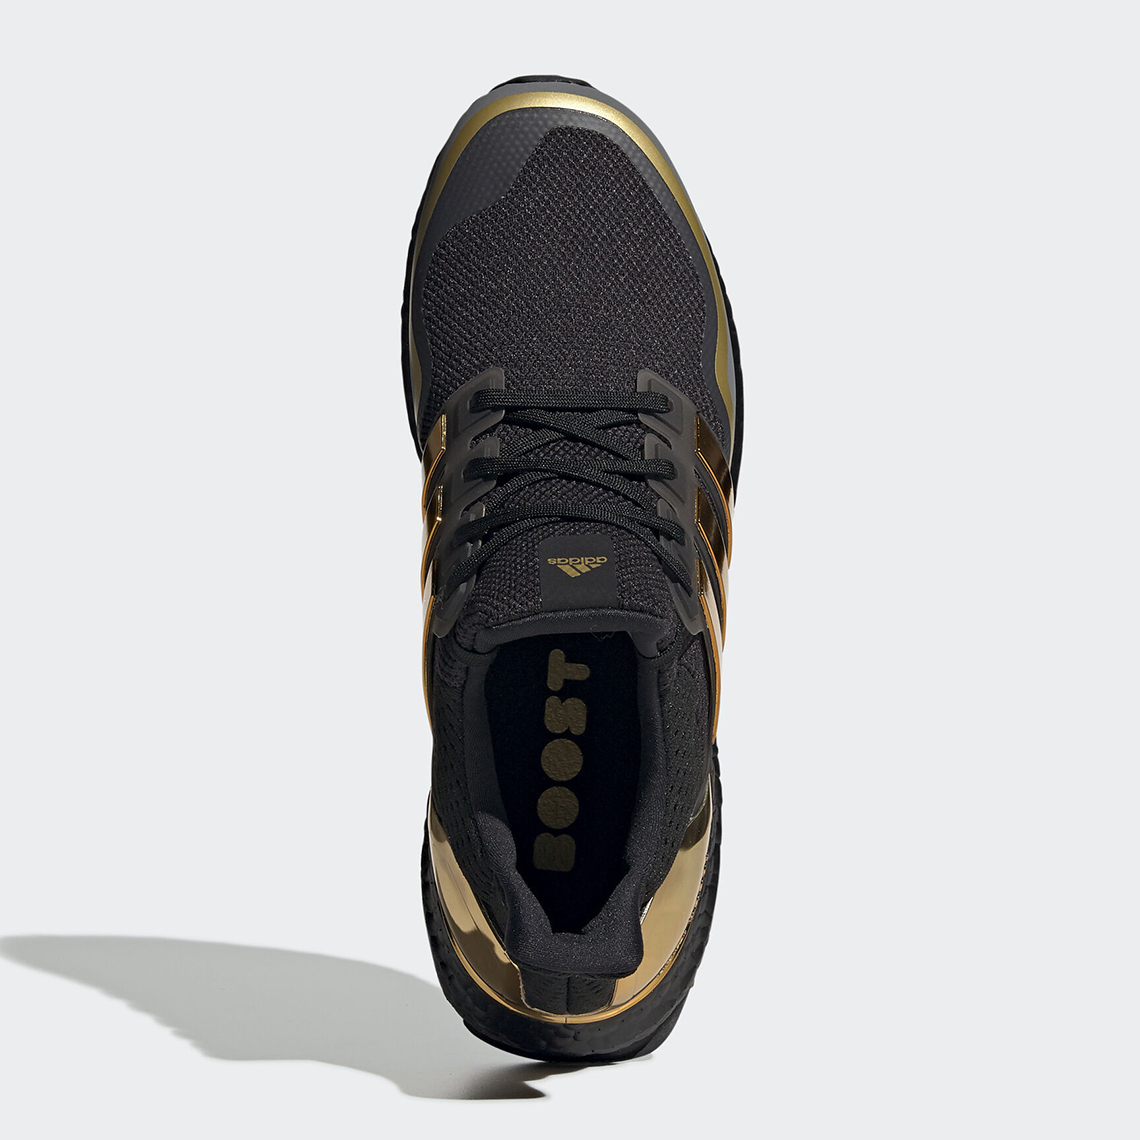 Prevail spirit Scrutinize adidas Ultra Boost Black Gold EG8102 | SneakerNews.com